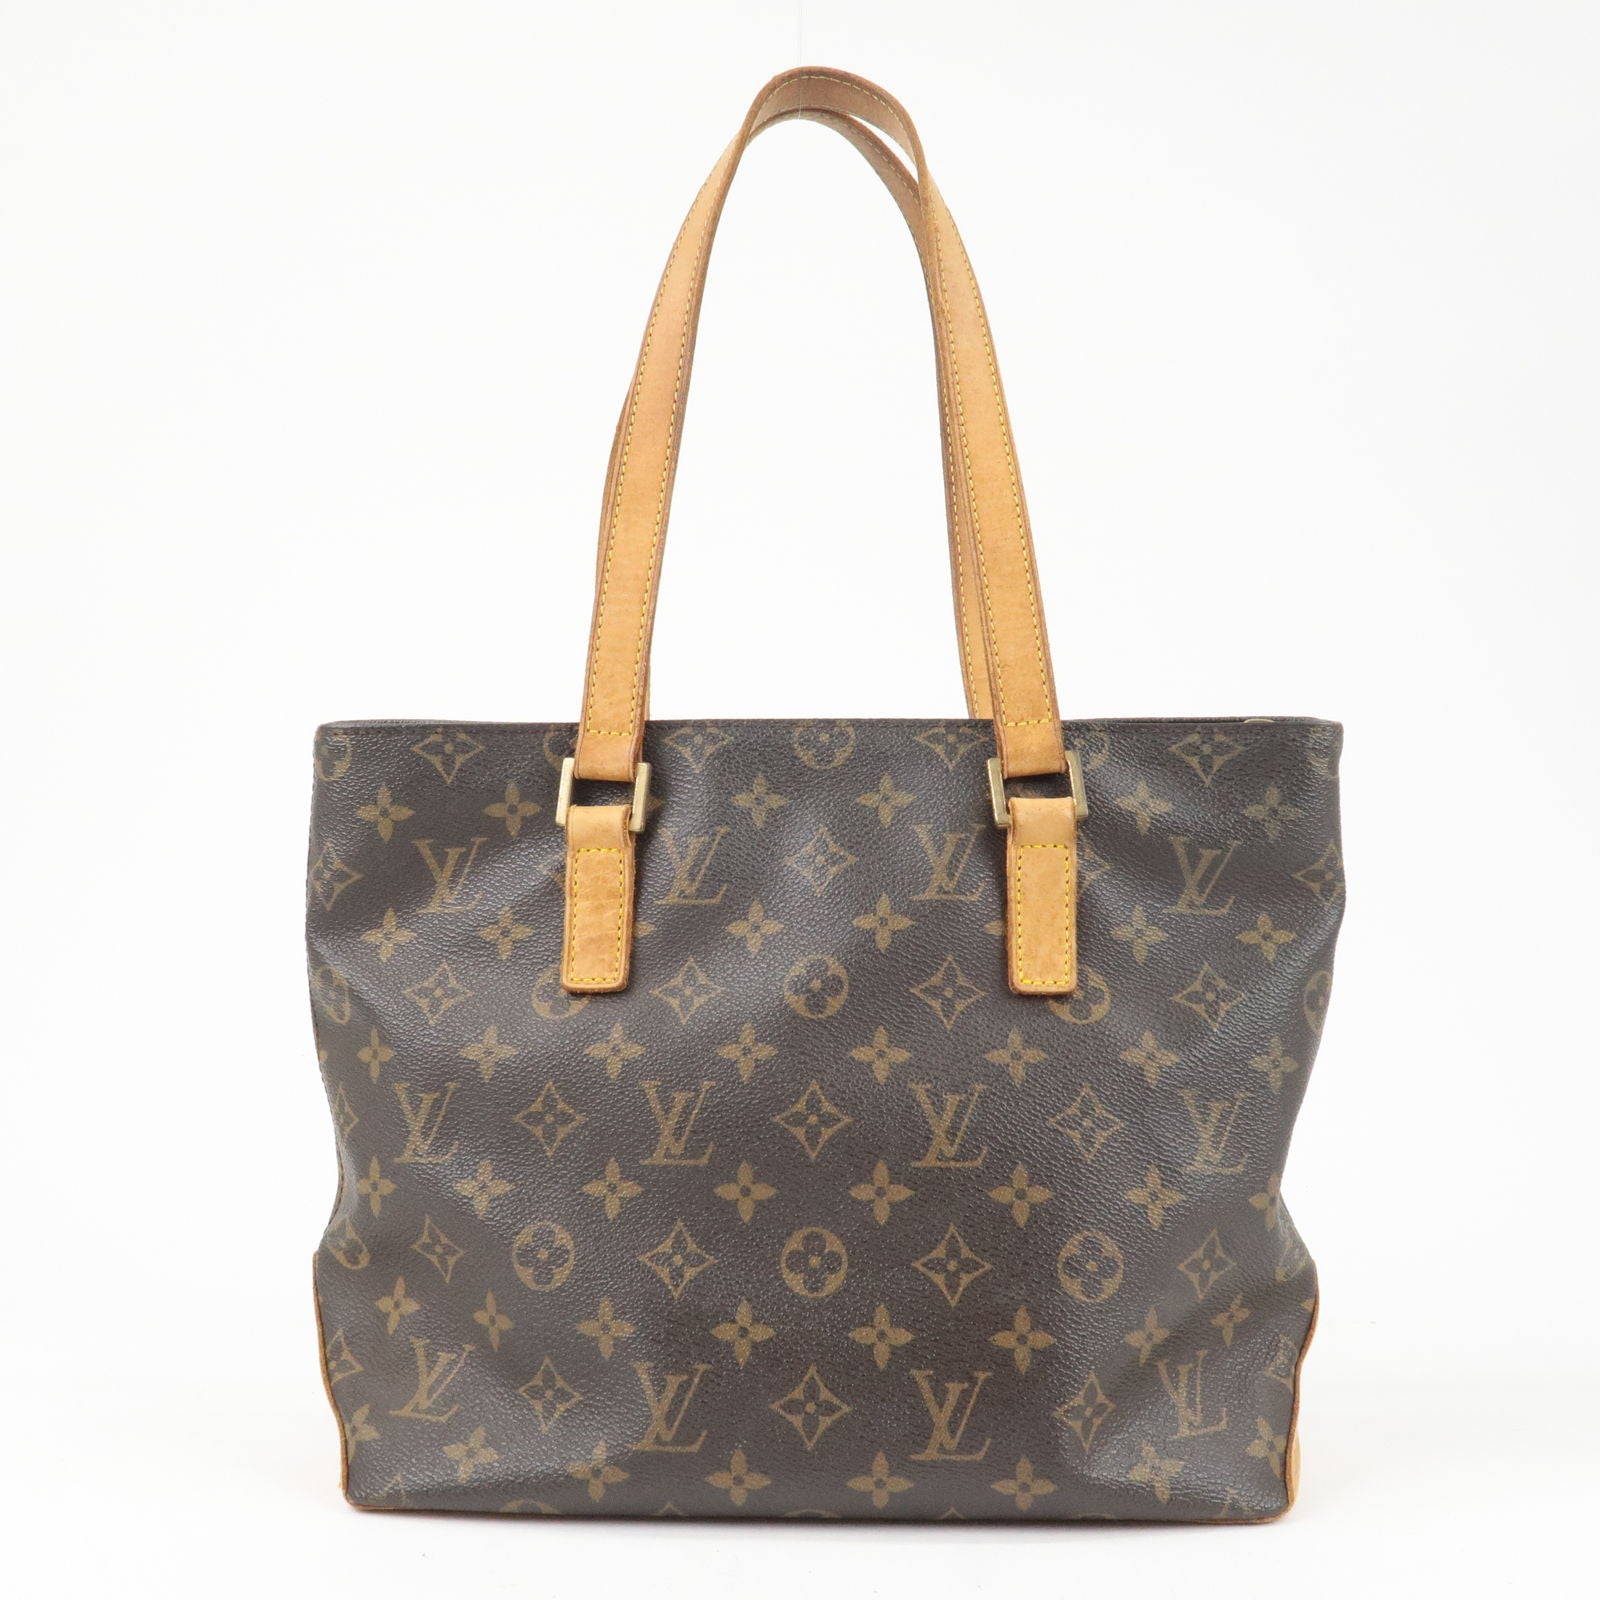 Louis Vuitton x Nigo LV Made Squared Pouch Bag Charm Monogram